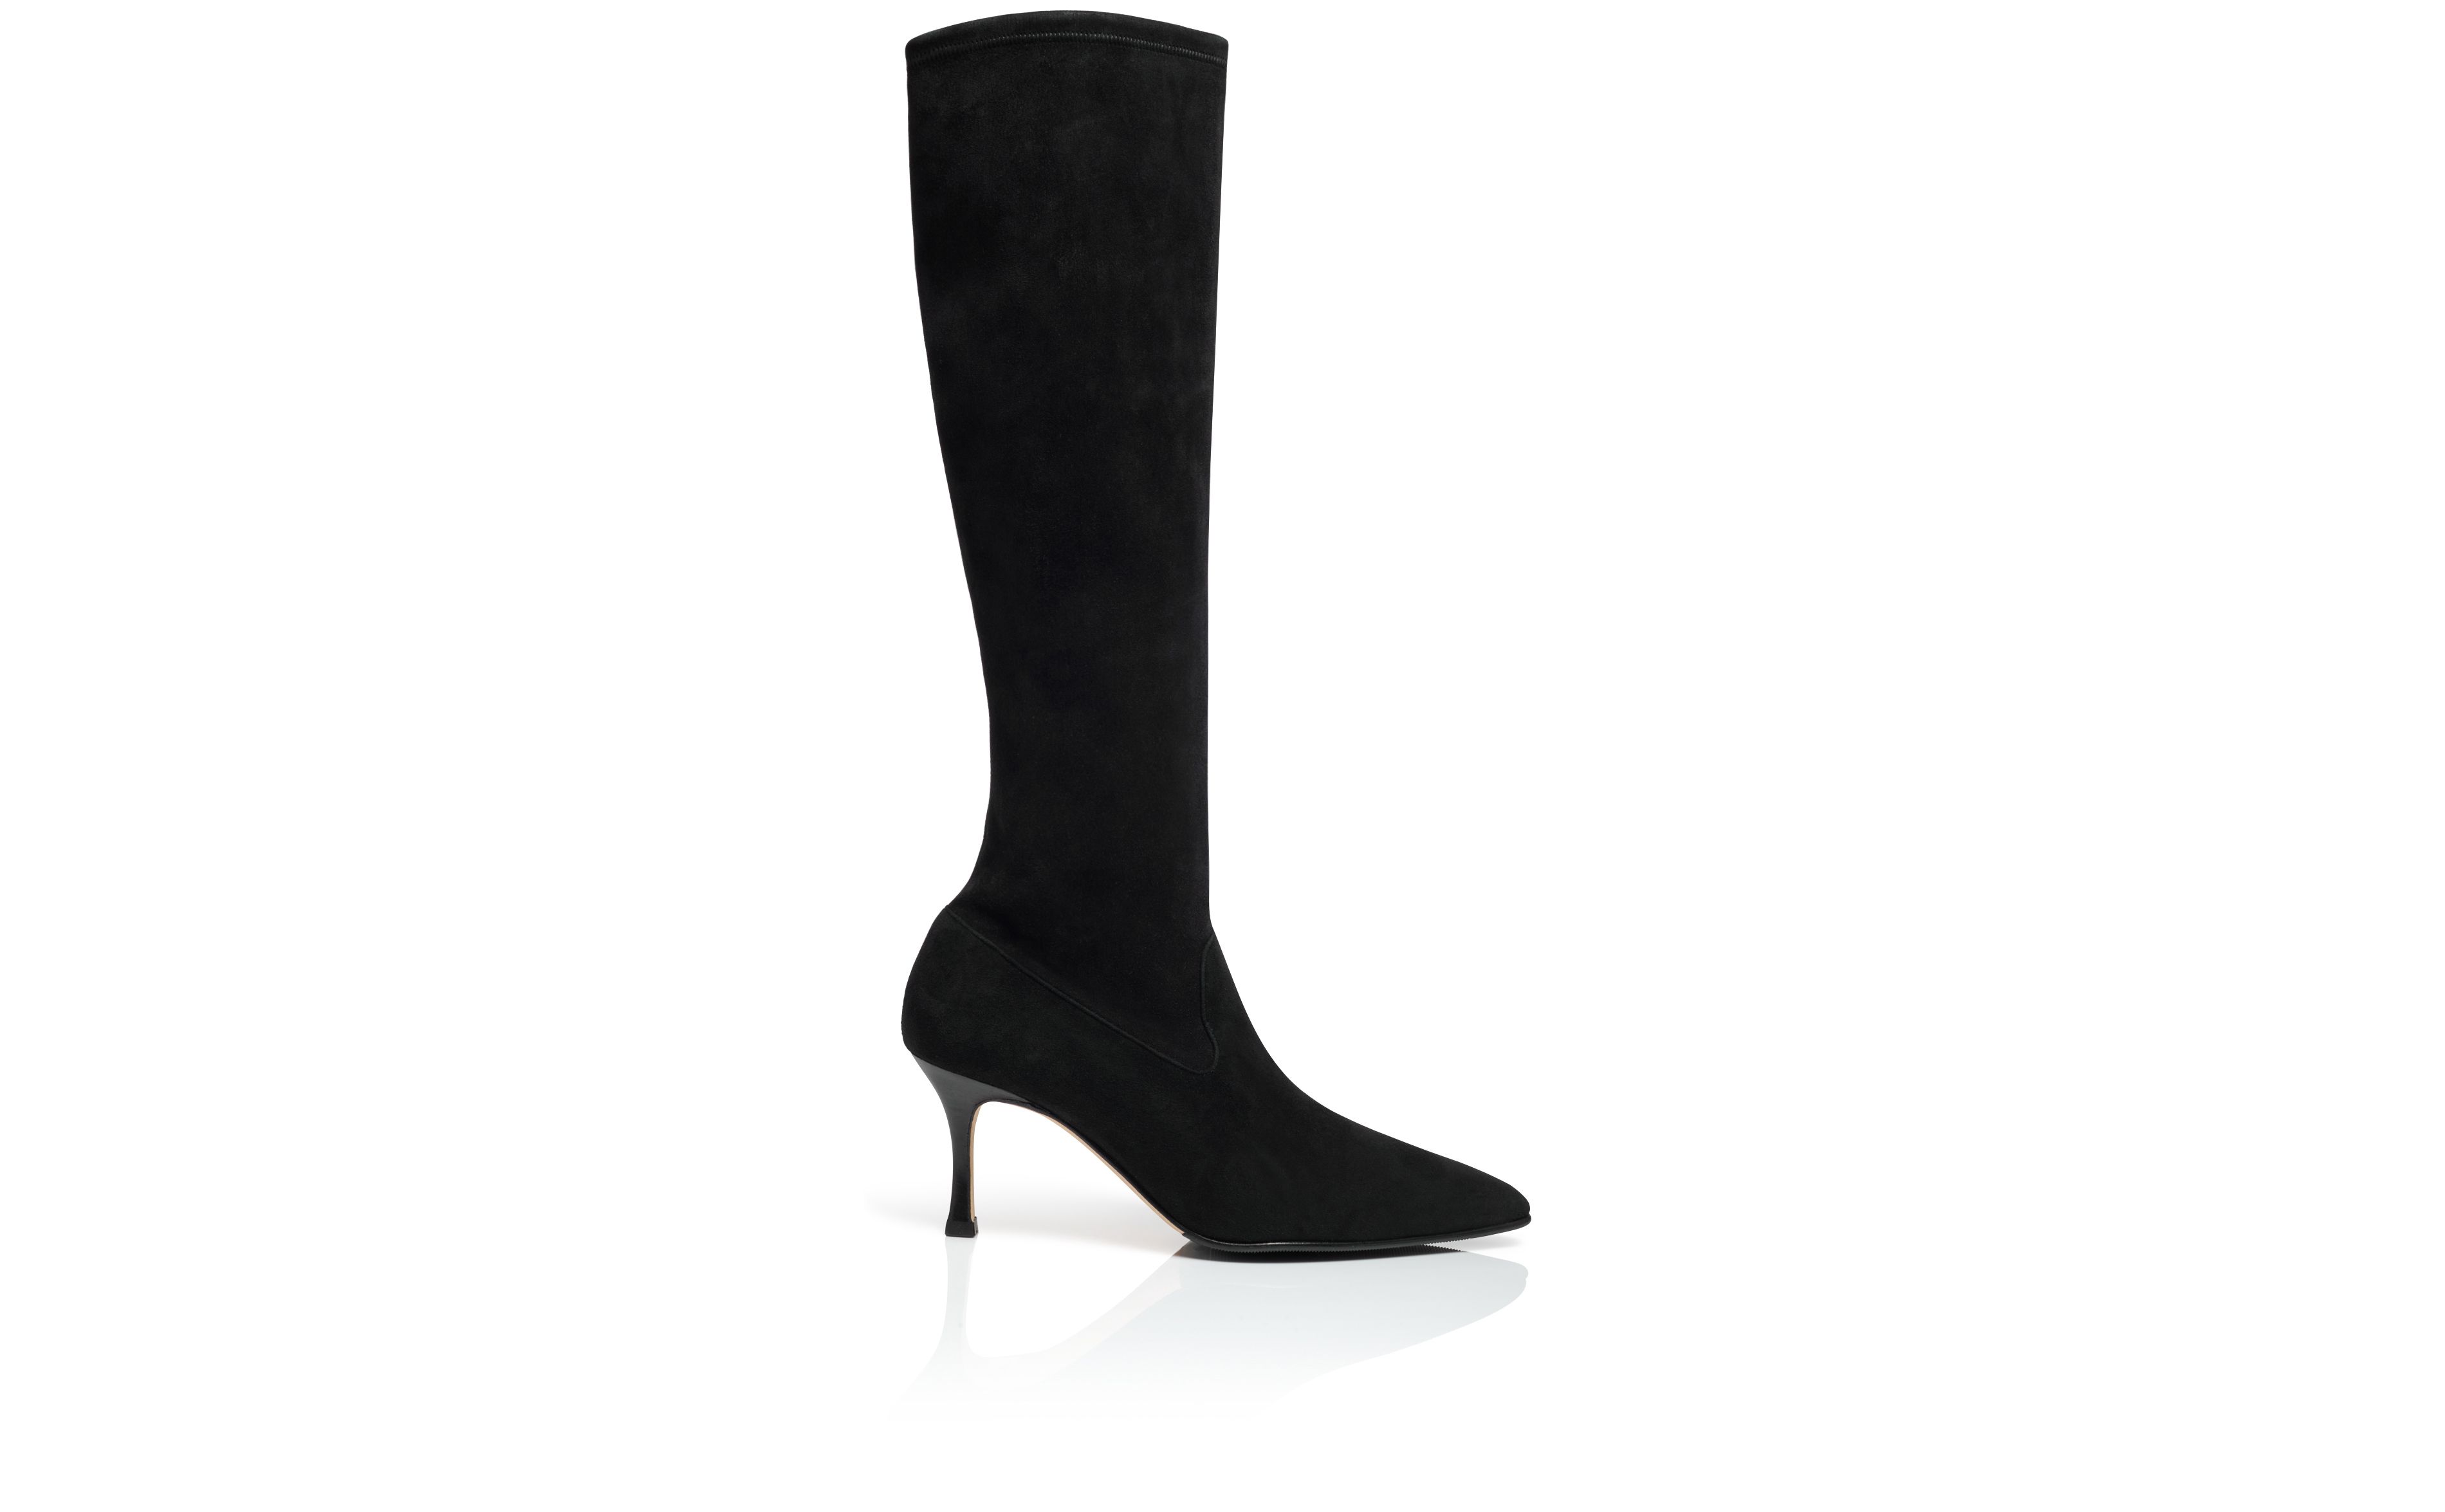 Designer Black Suede Knee High Boots - Image Side View